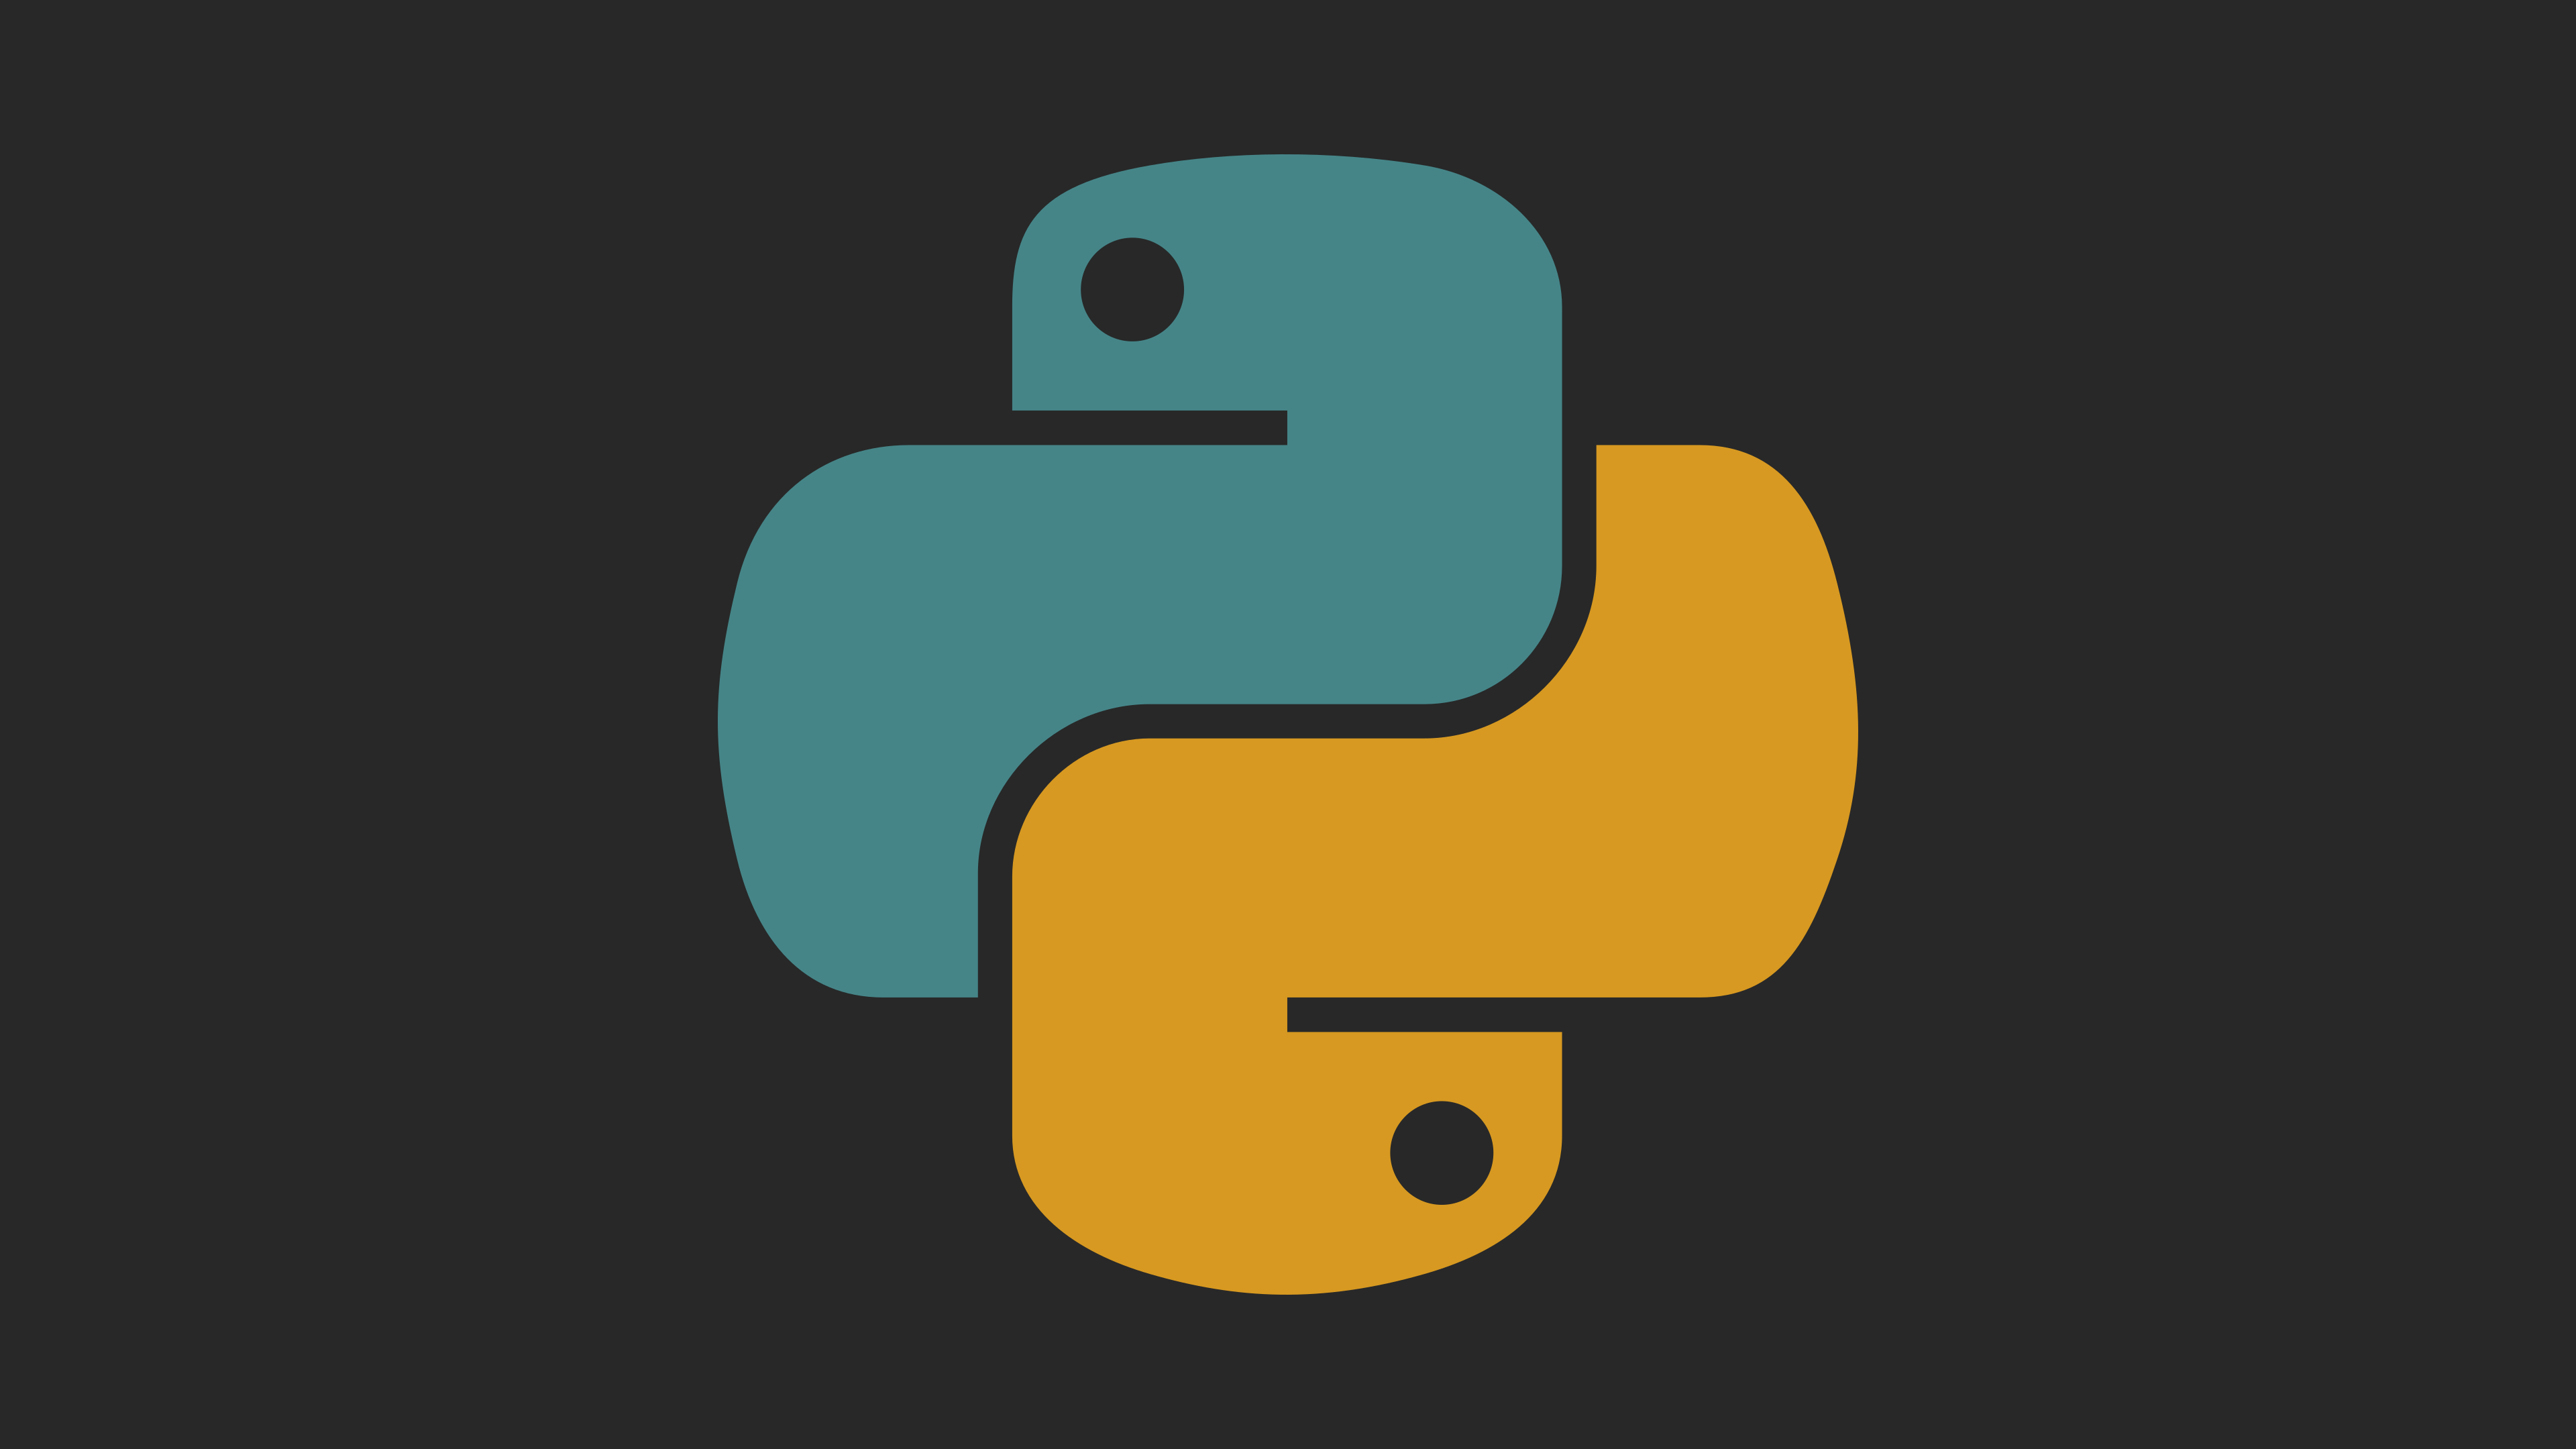 Self get python. Питон язык программирования лого. Значок питона. Ikonka Пайтон. Python 3 логотип.